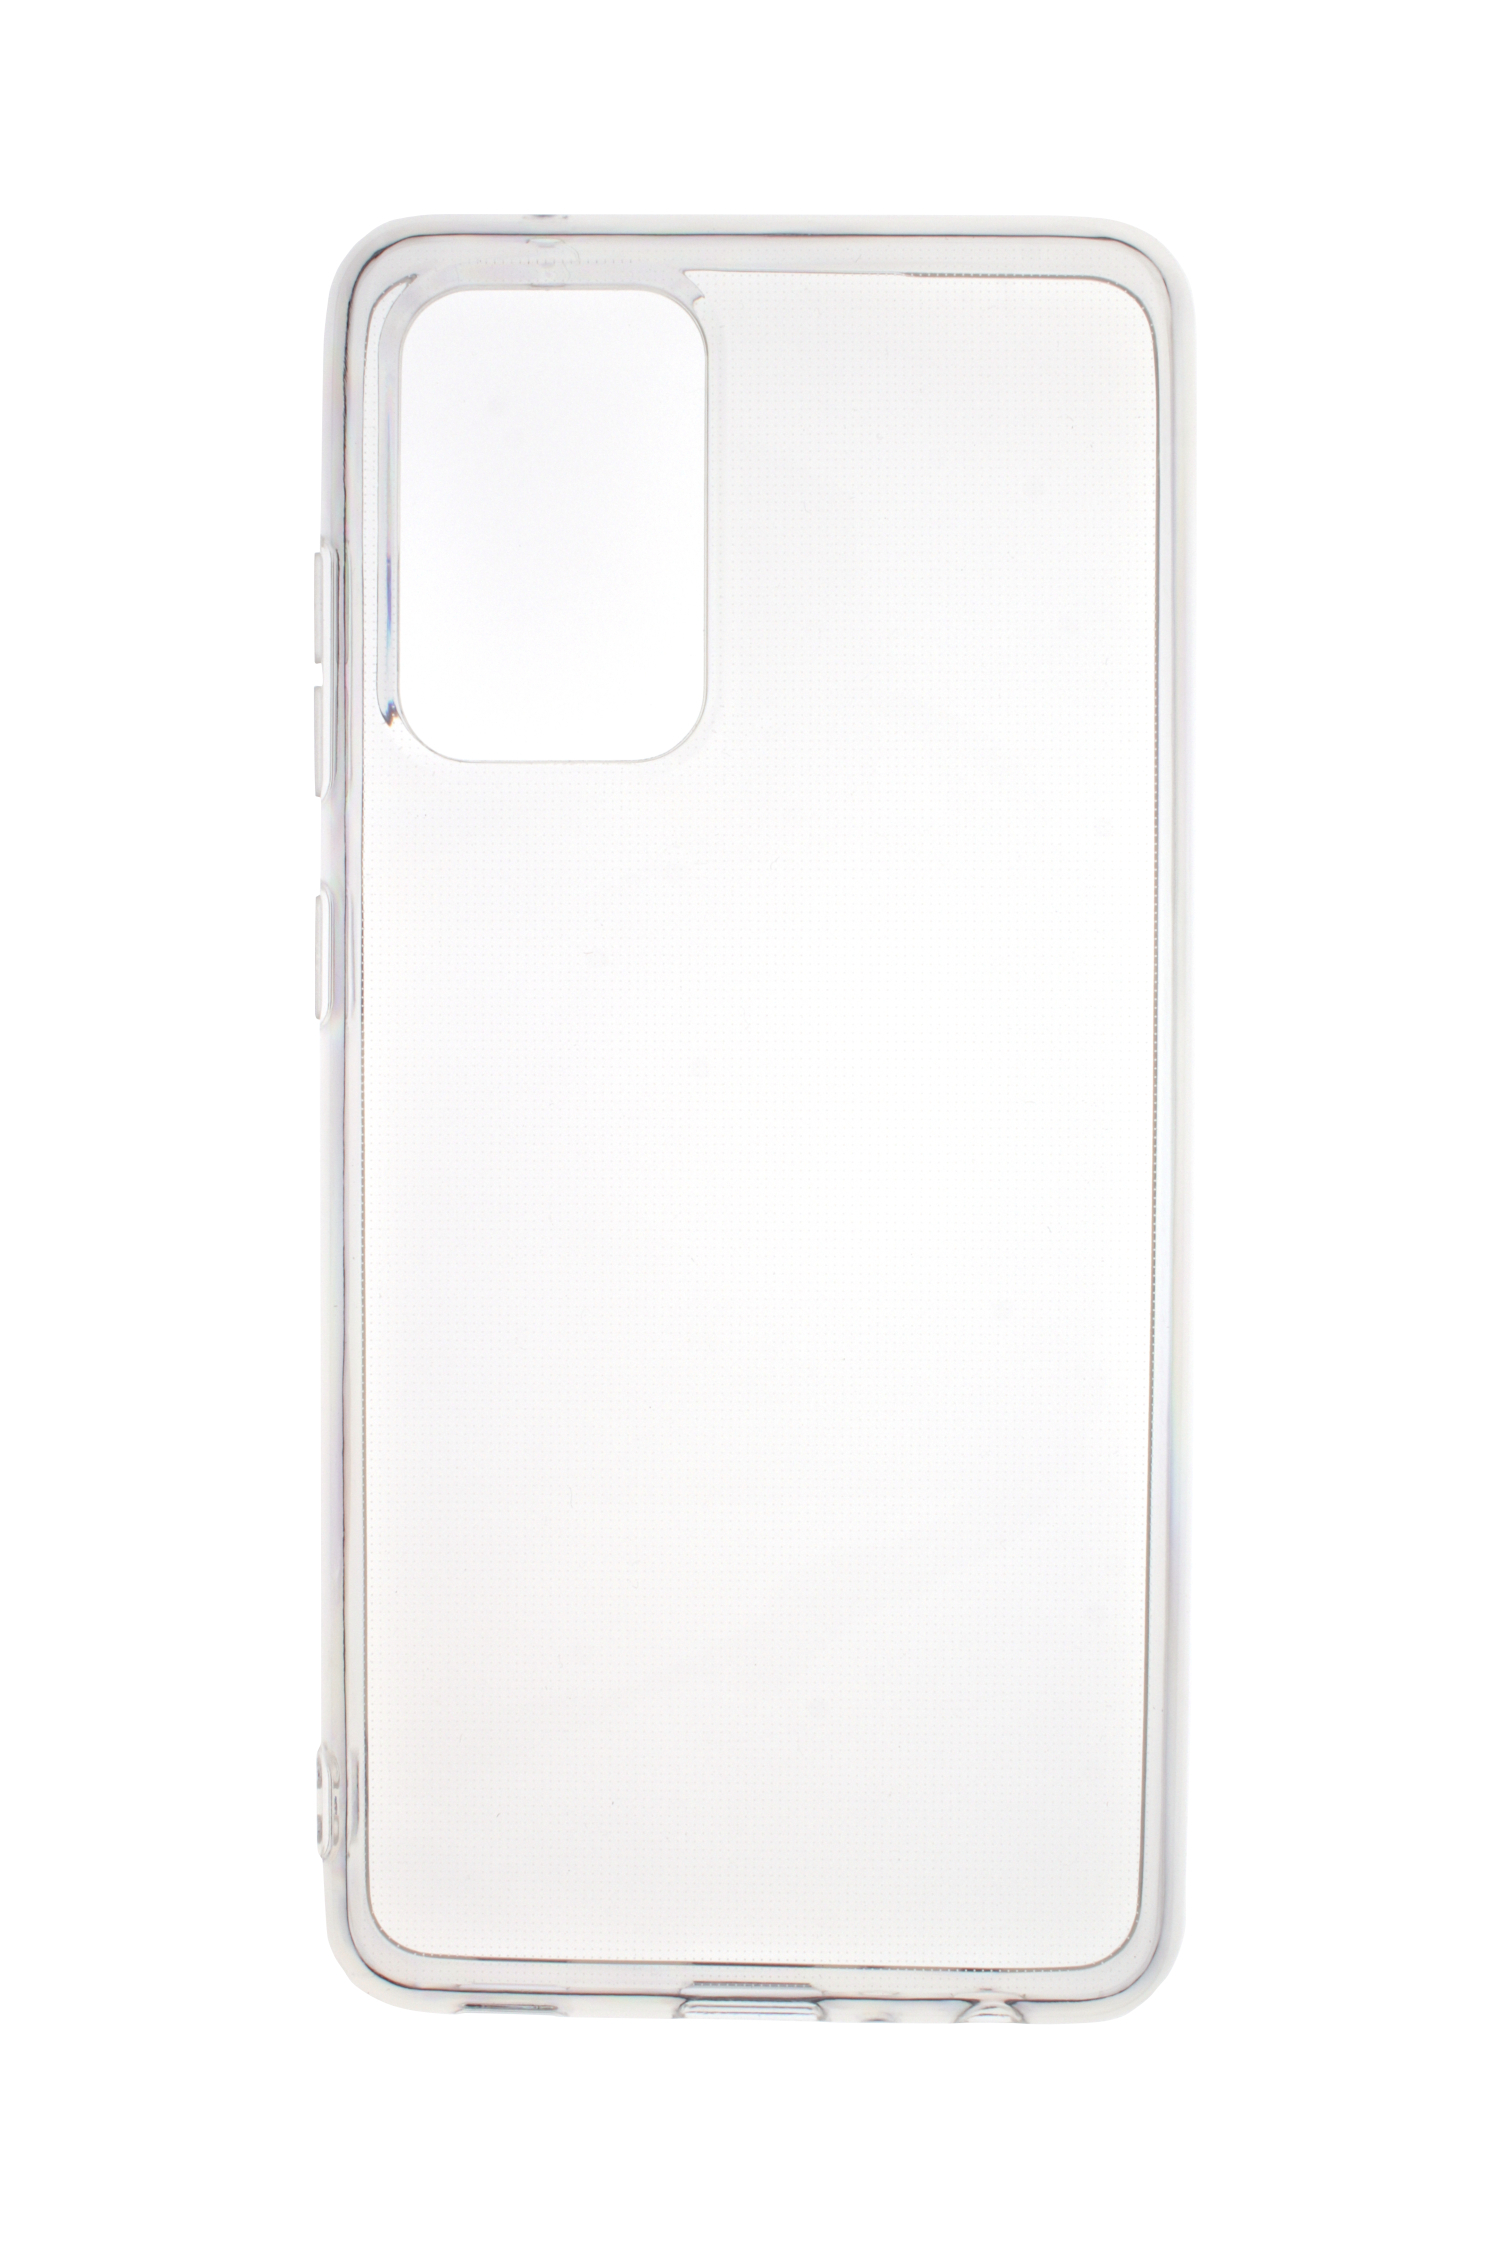 Case, A52 mm 5G, Samsung, Galaxy A52, Galaxy Backcover, 1.8 A52s 5G, JAMCOVER Transparent Galaxy TPU